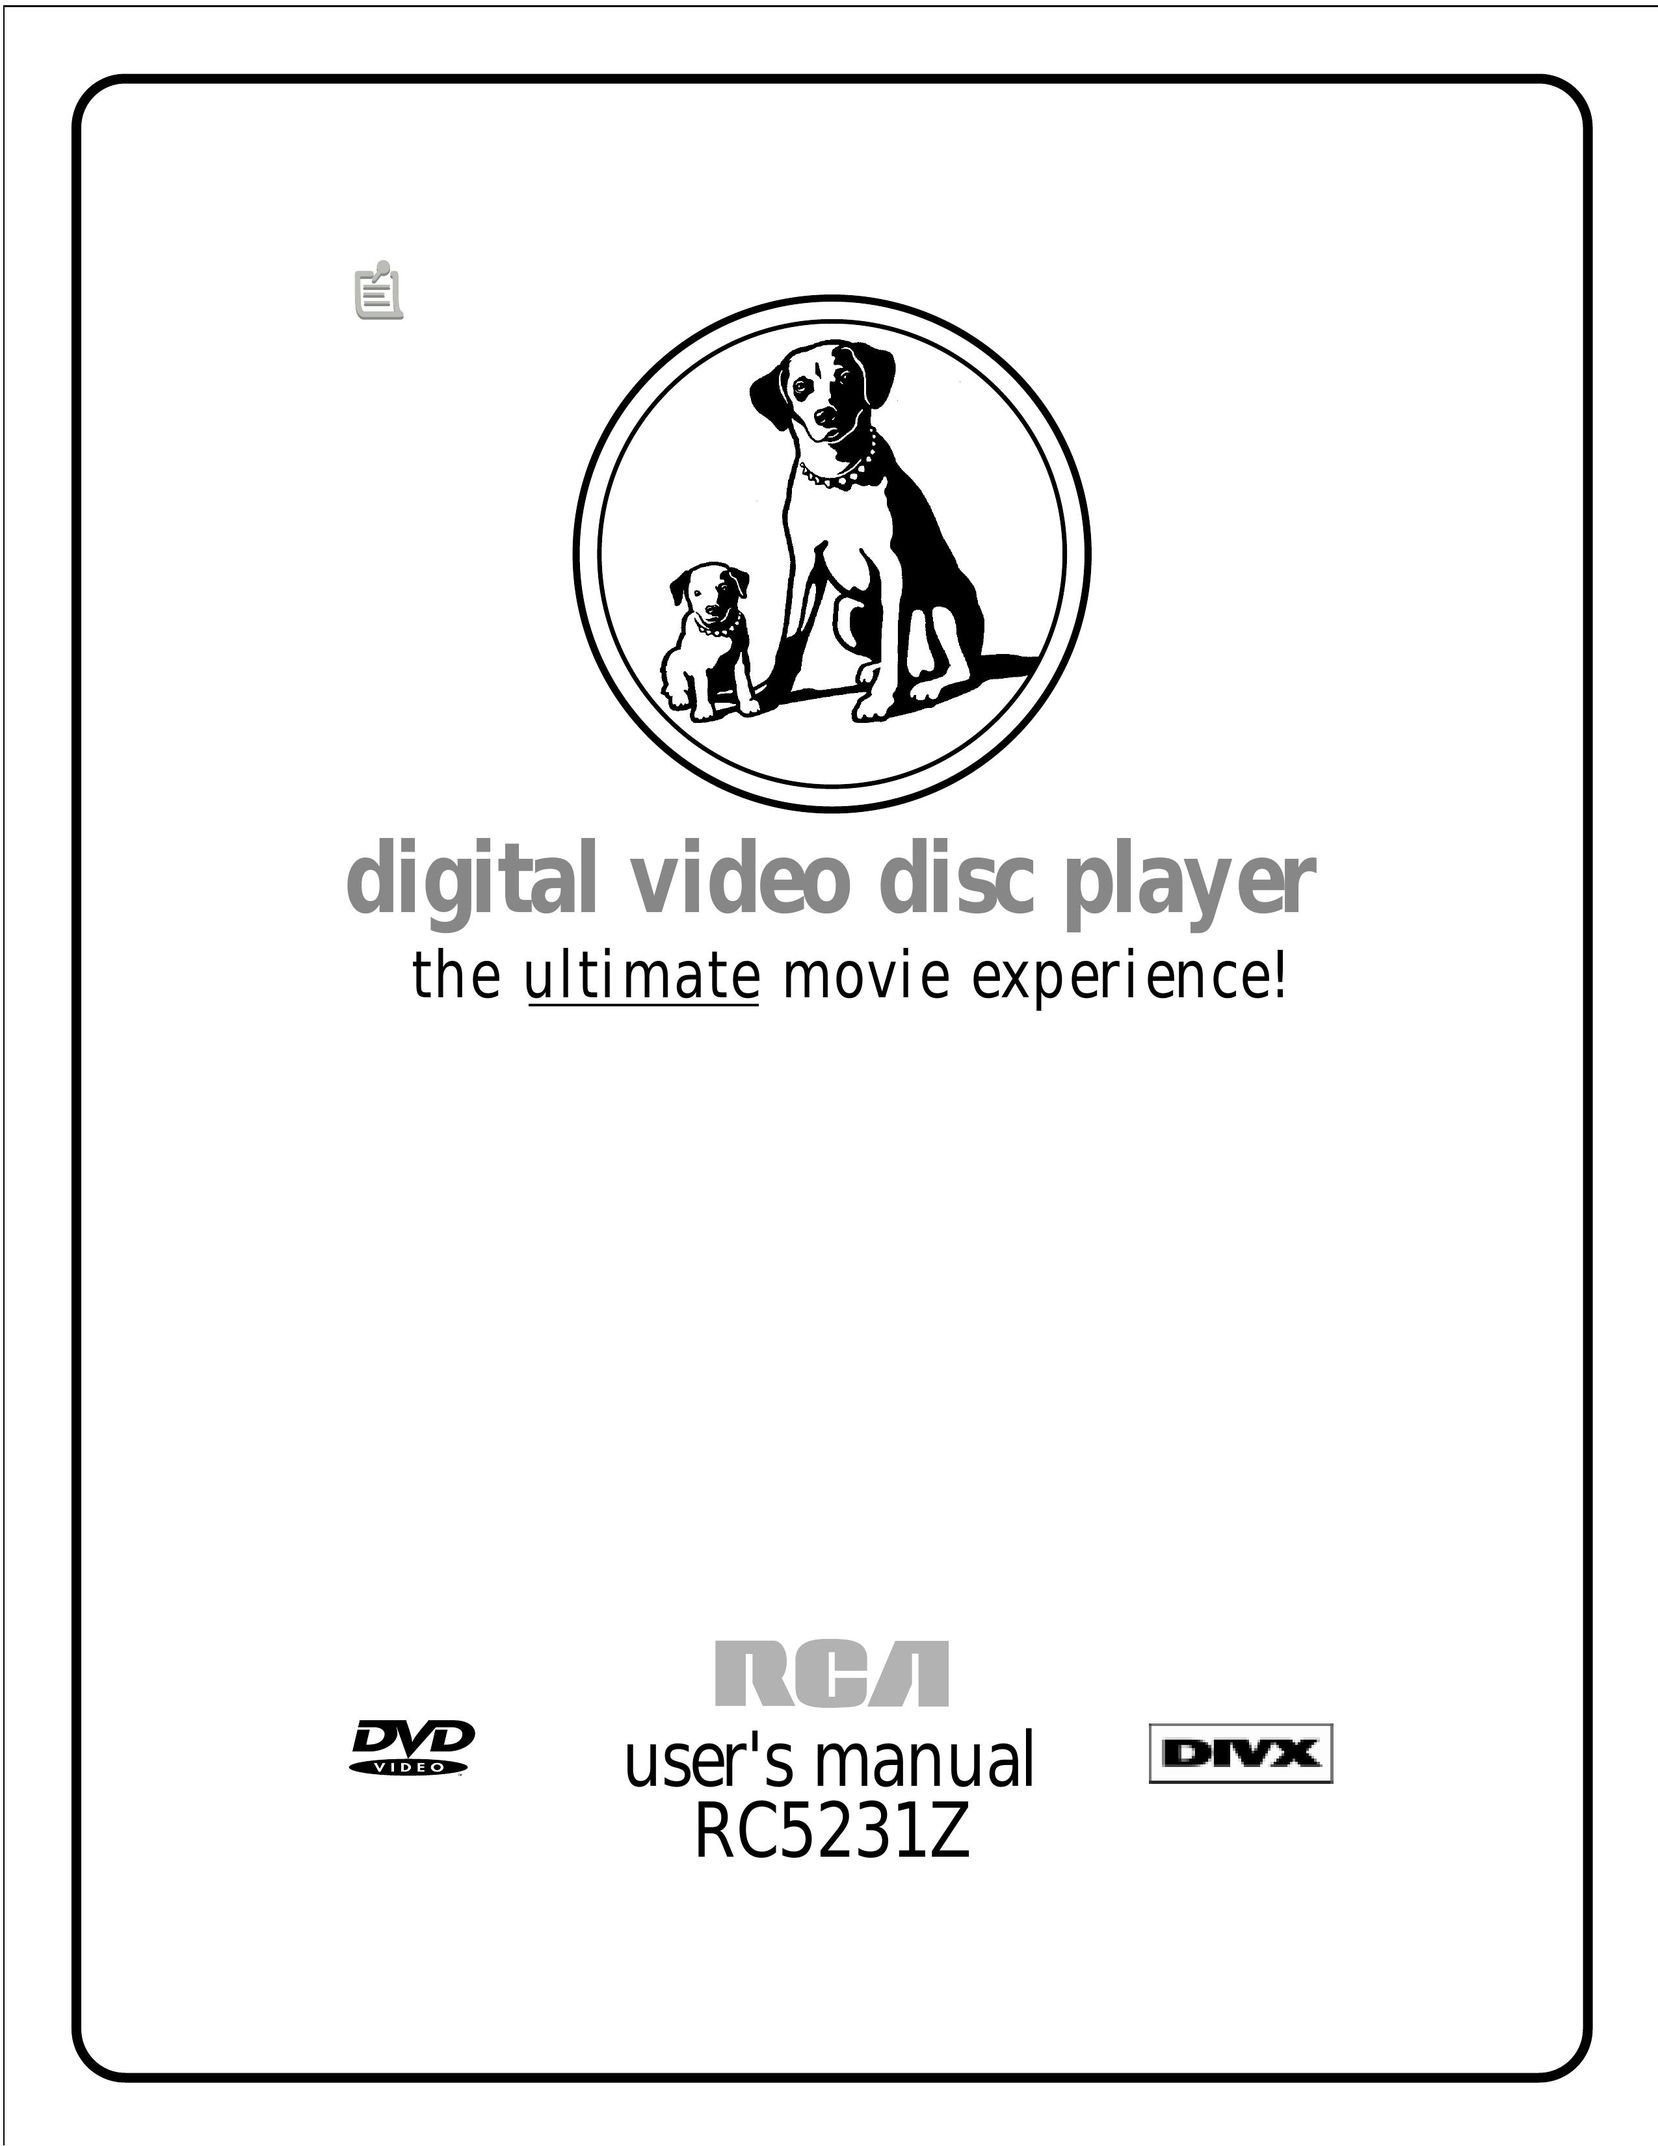 RCA RC5231Z Portable DVD Player User Manual